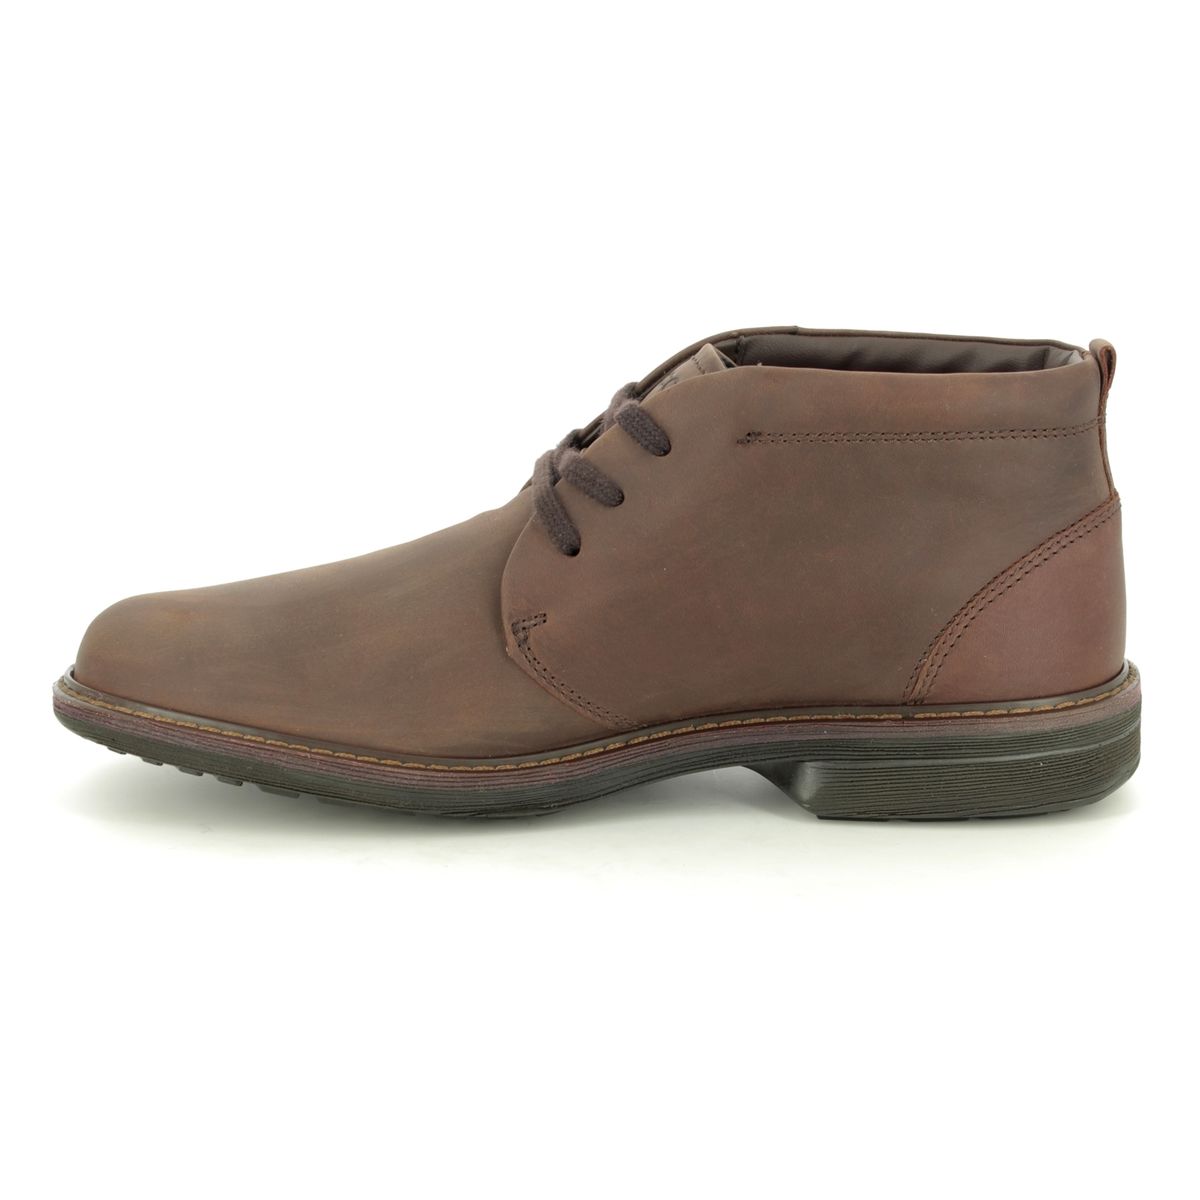 ECCO Turn Chukka Gtx Brown leather Mens boots 510224-02482